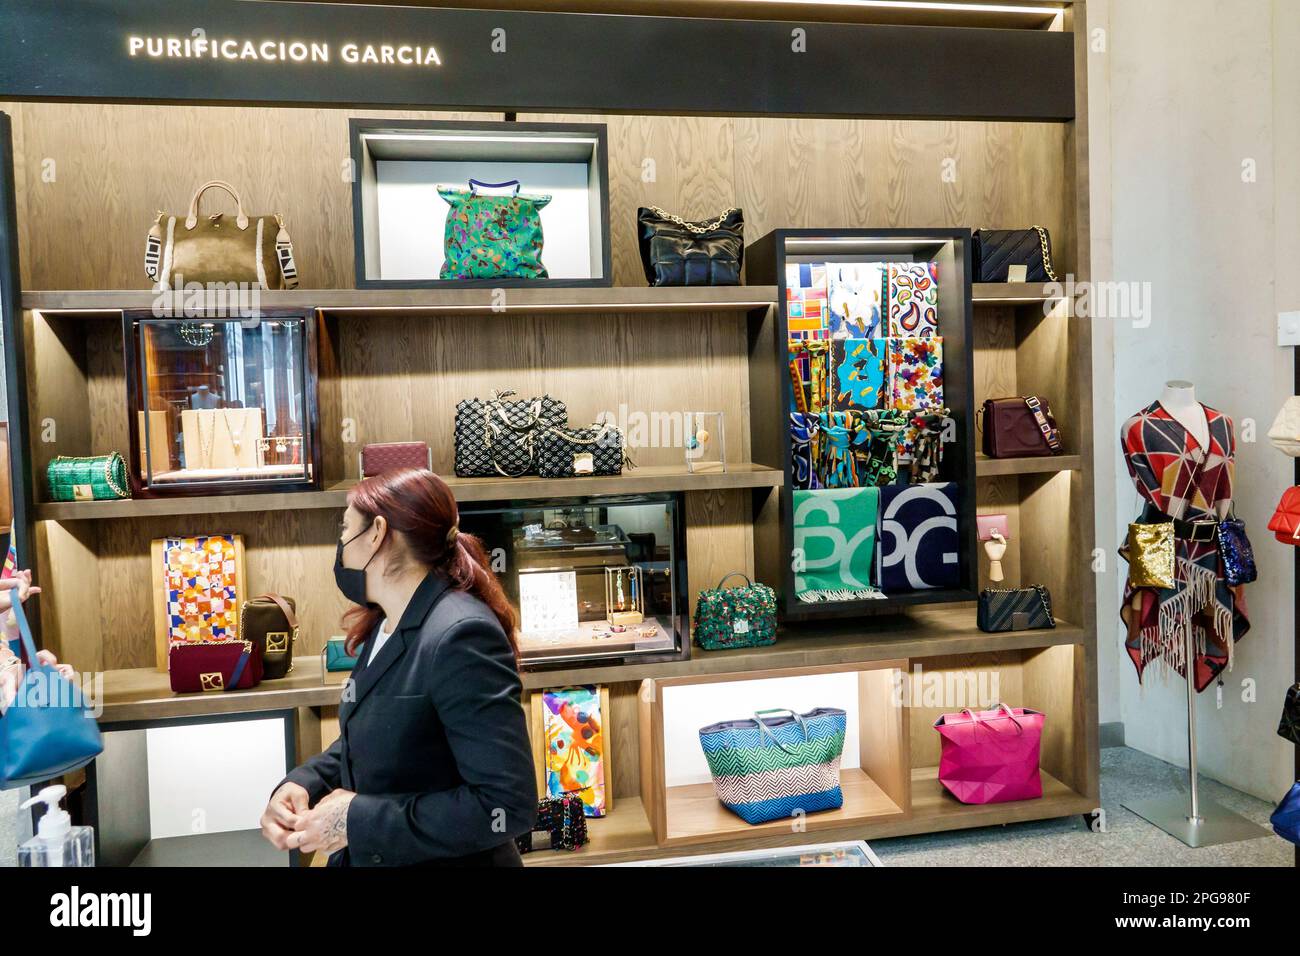 Mexico City,Polanco,El Palacio de Hierro,luxury department store,Purificacion Garcia designer handbags,woman women lady female,adult adults,resident r Stock Photo